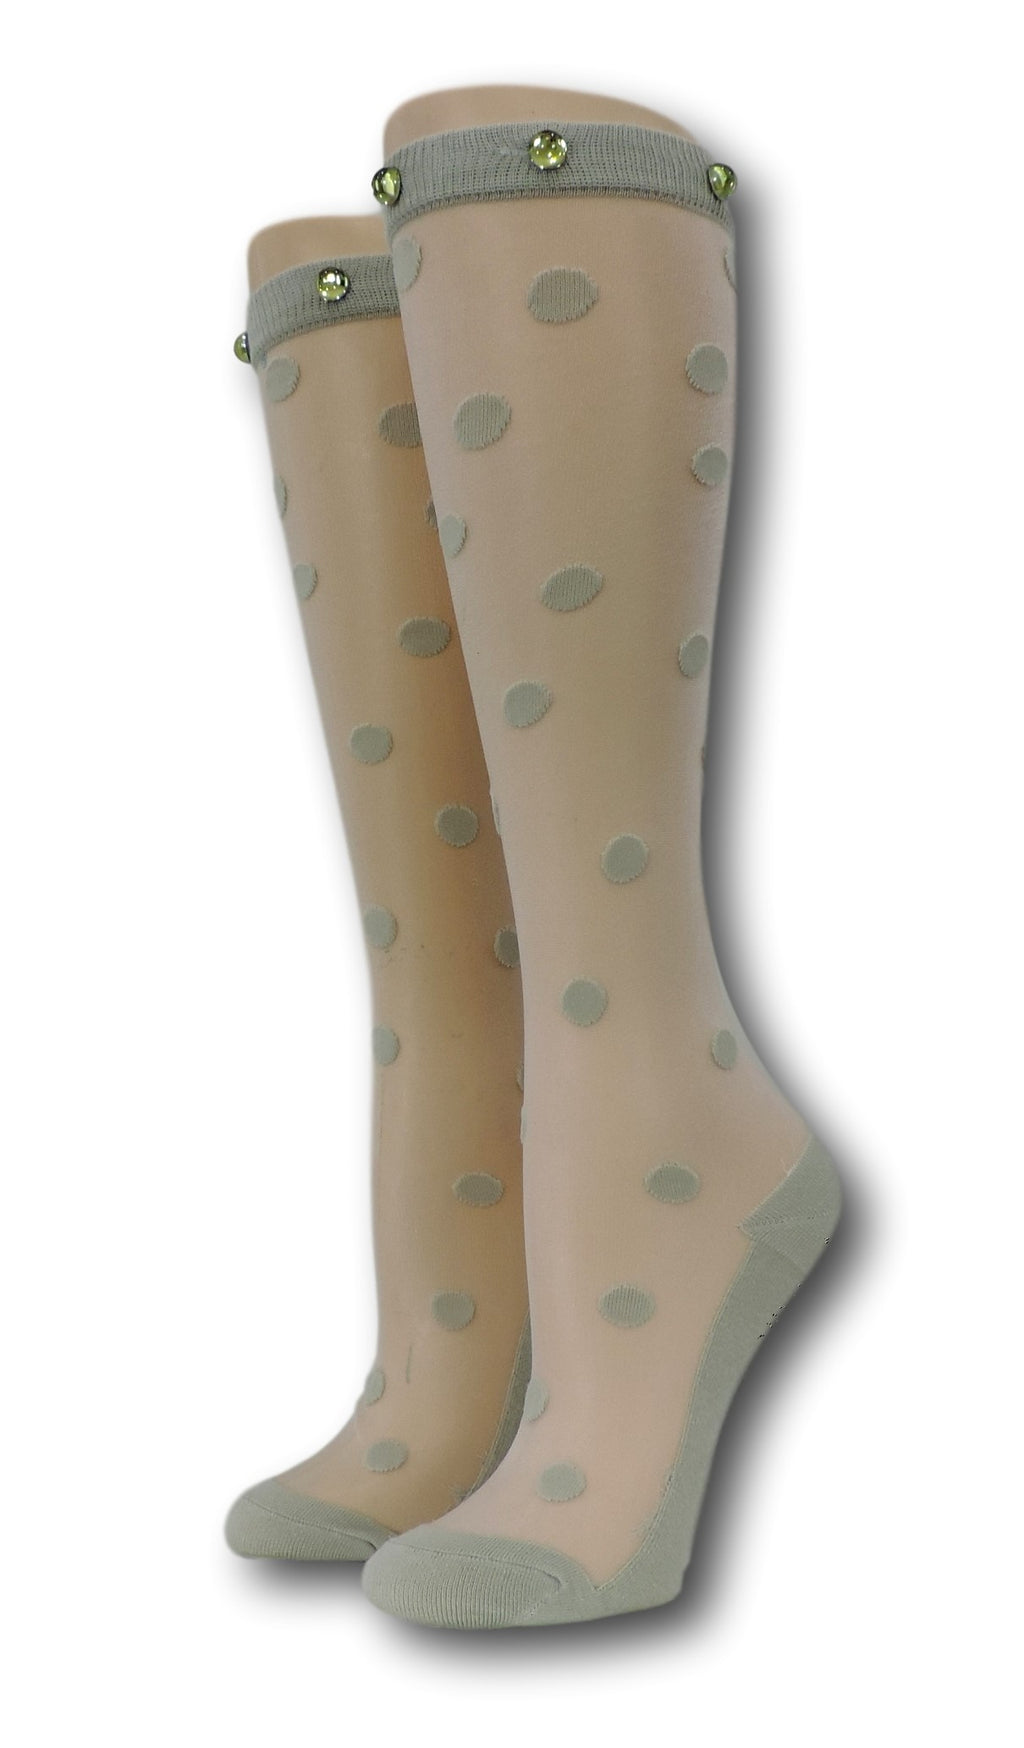 Rhino Polka Knee High Sheer Socks with beads